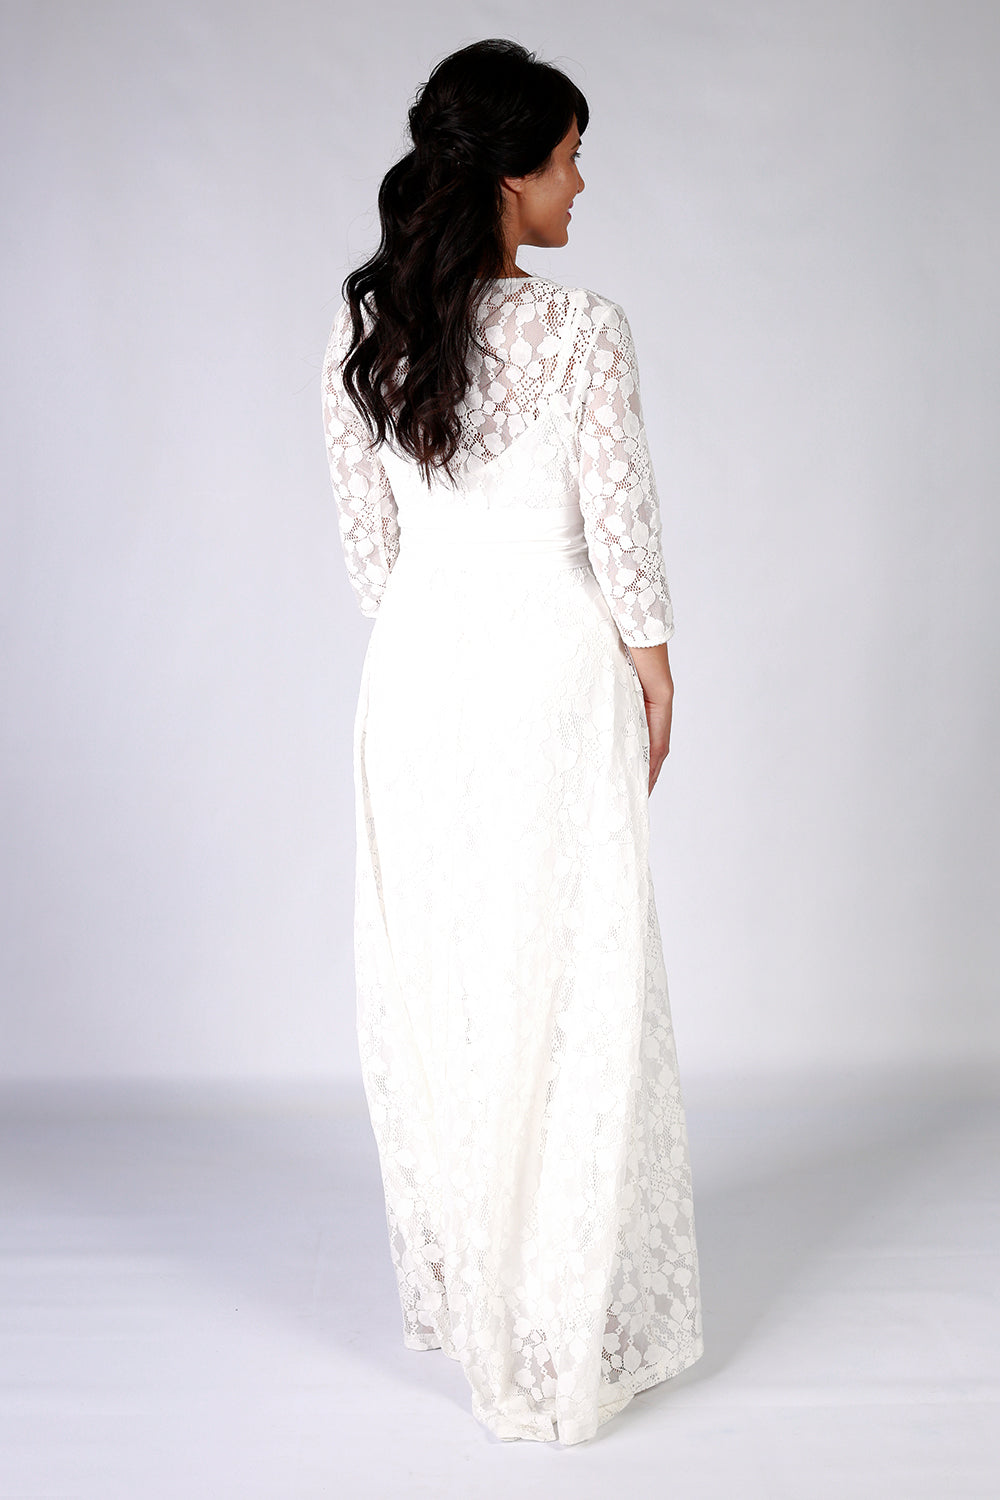 Sophie's Wedding Dress | Annah Stretton Bridal | Lace Wedding Dress | Affordable Designer Wedding Dress | Classic Modern Wedding Dress